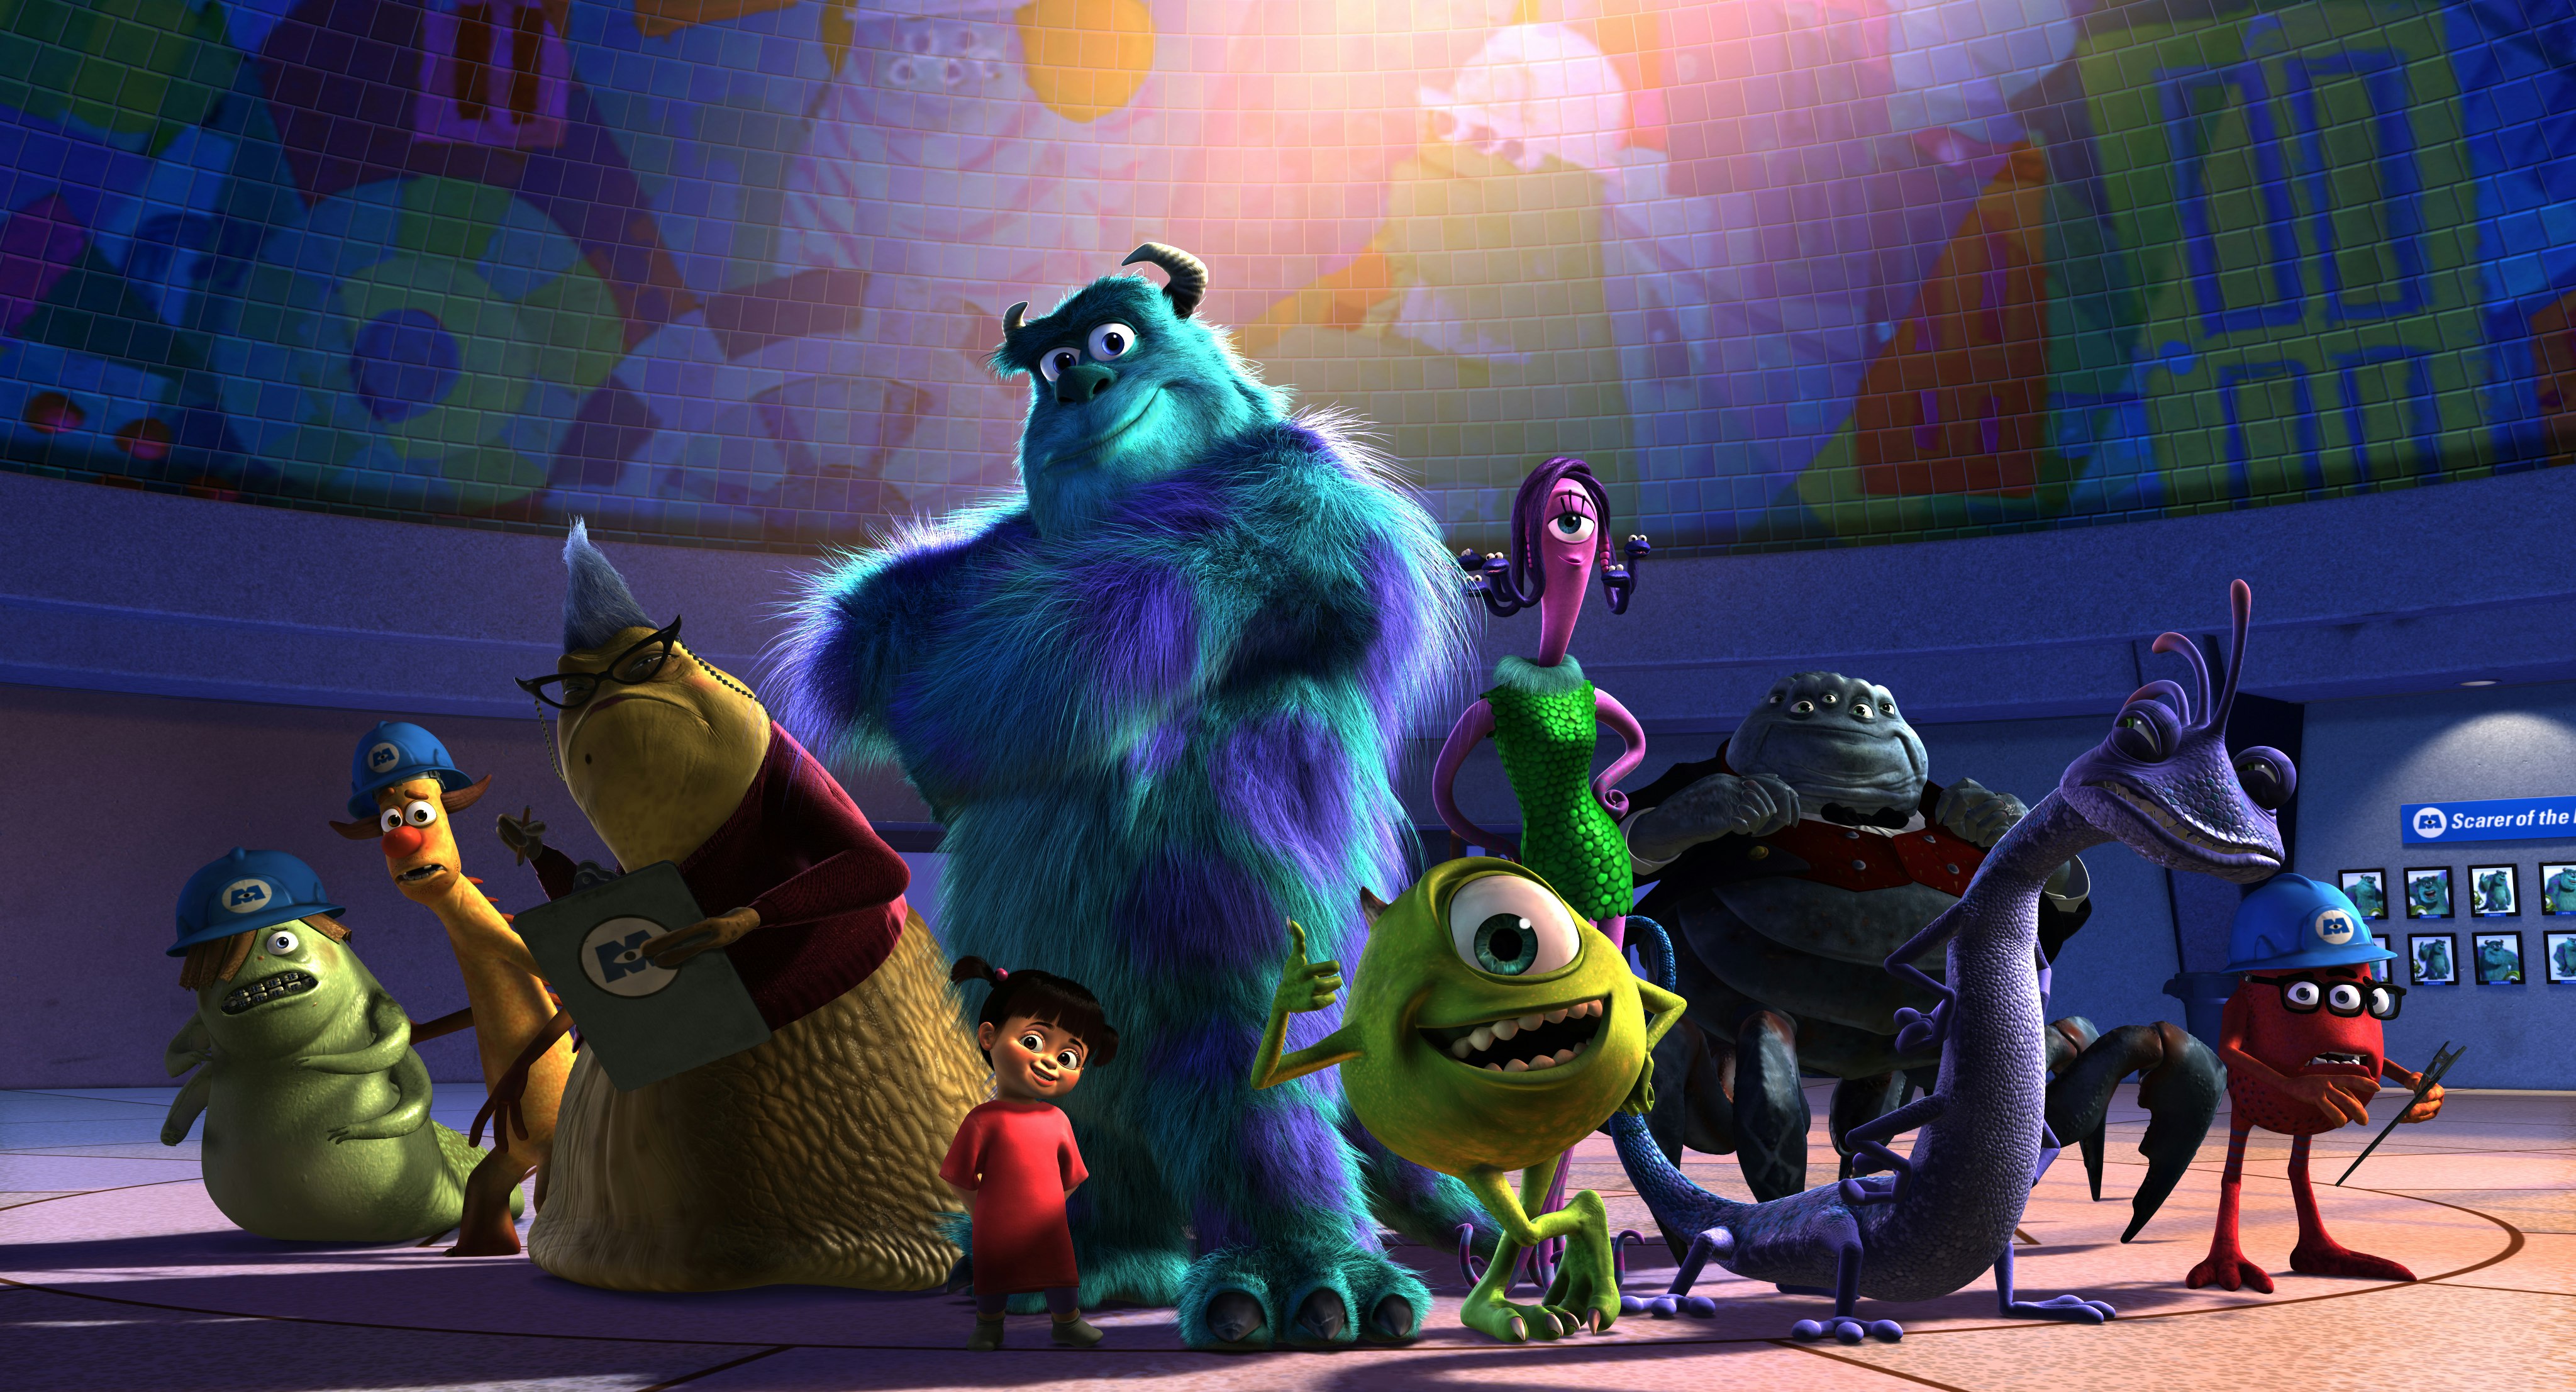 2x20 Disney Pixar (Finding Nemo + Monsters Inc.) - Educa Borras